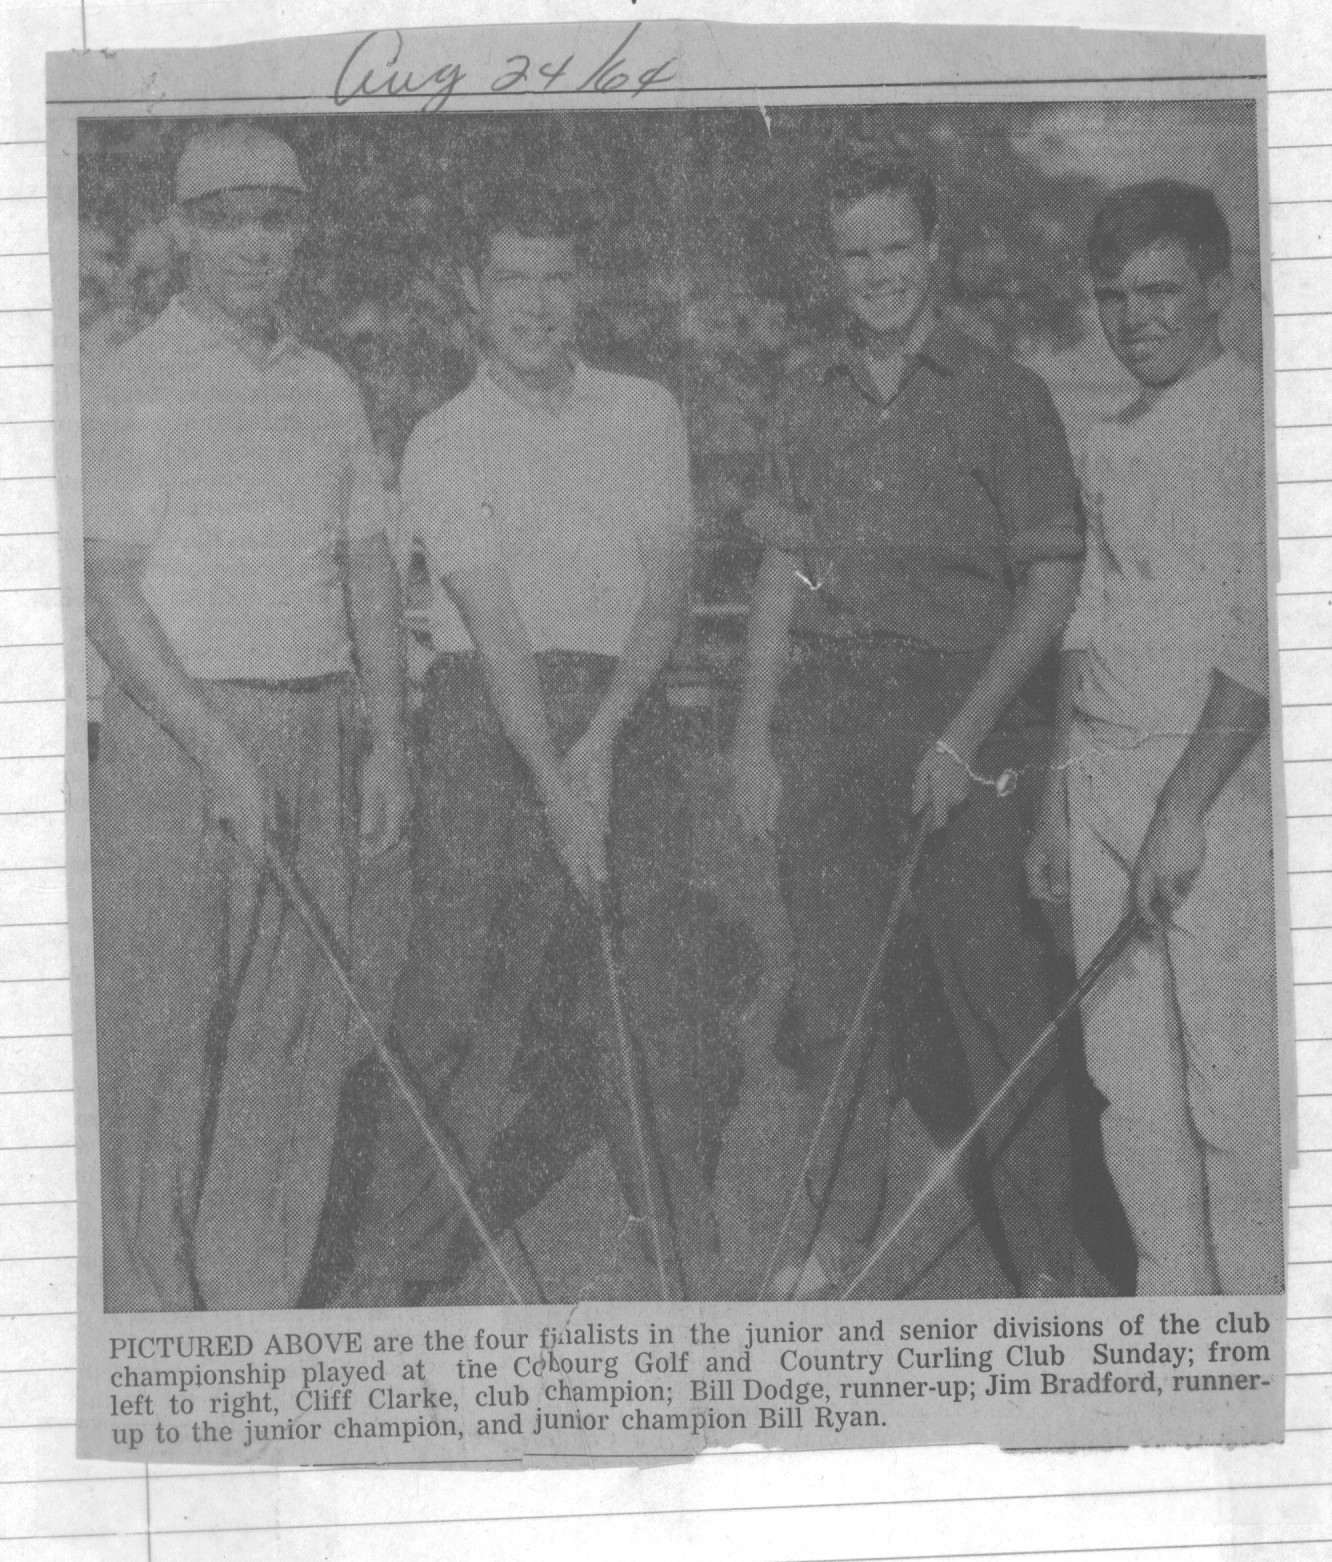 1964-08-24 Golf -Finalists in Club Championship